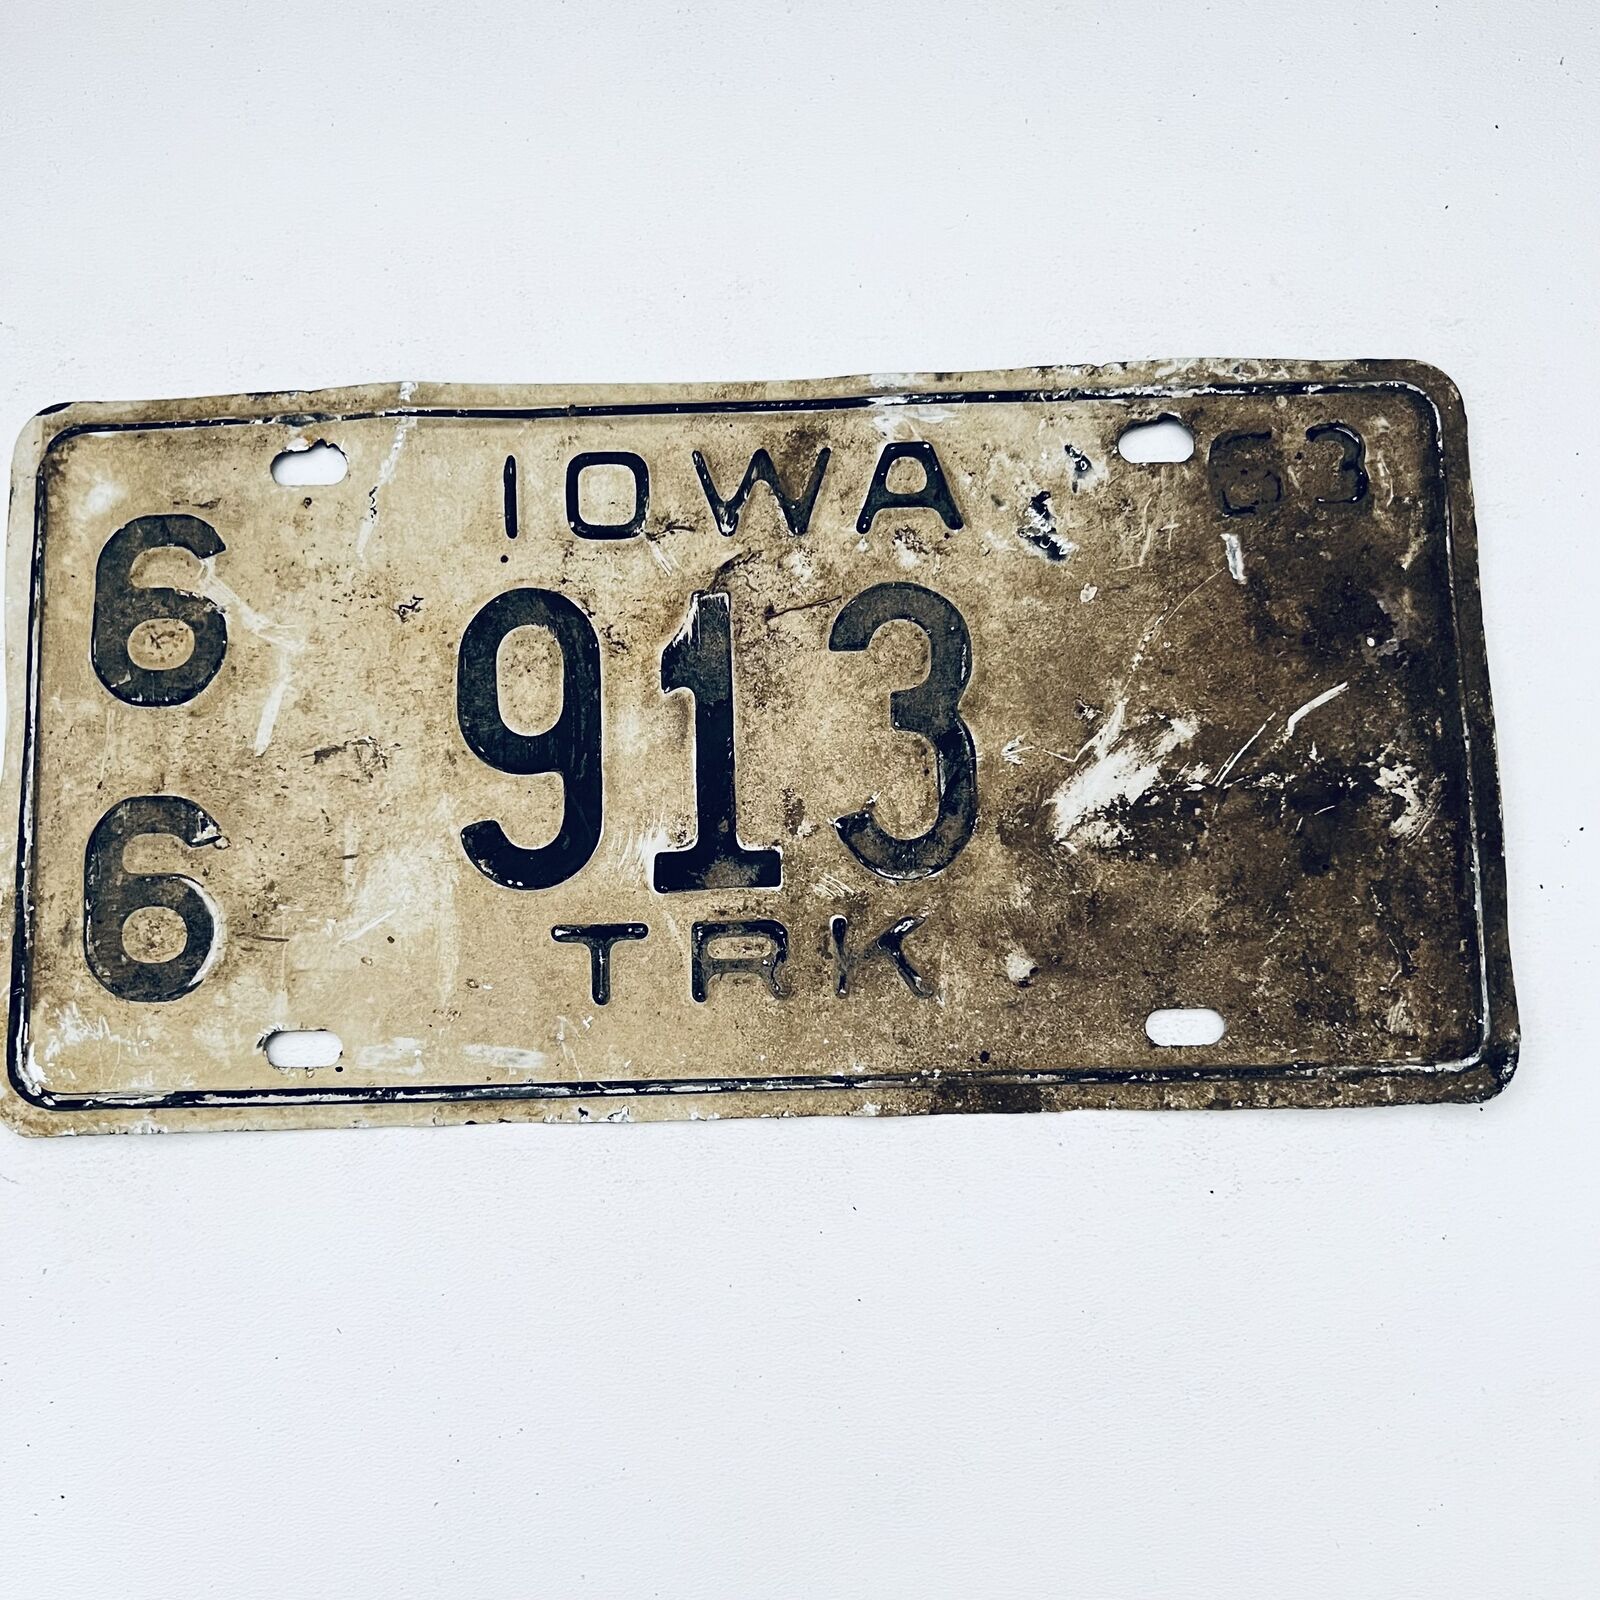 1963 United States Iowa Mitchell County Truck License Plate 66 913